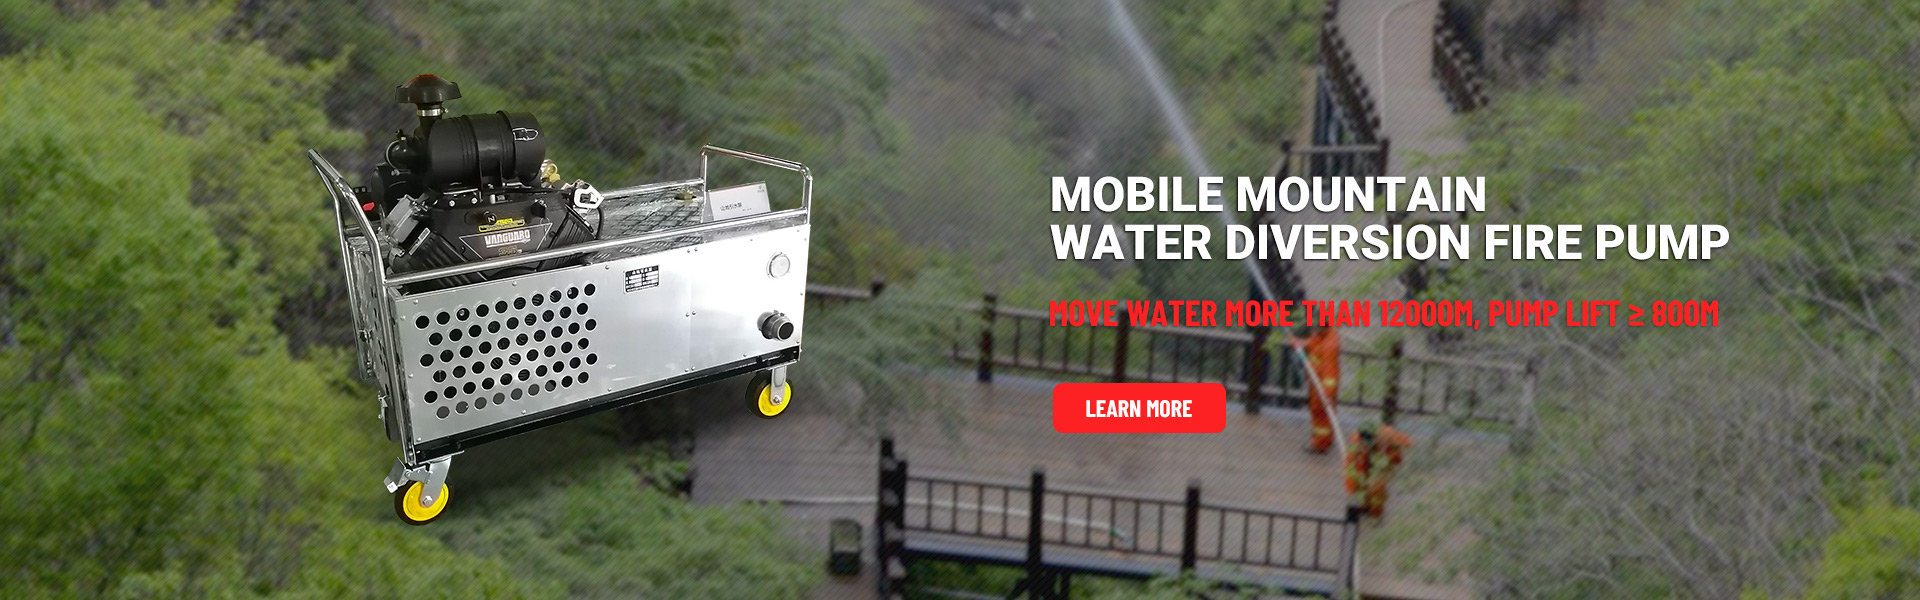 Мобилна водоотклонна противопожарна помпа